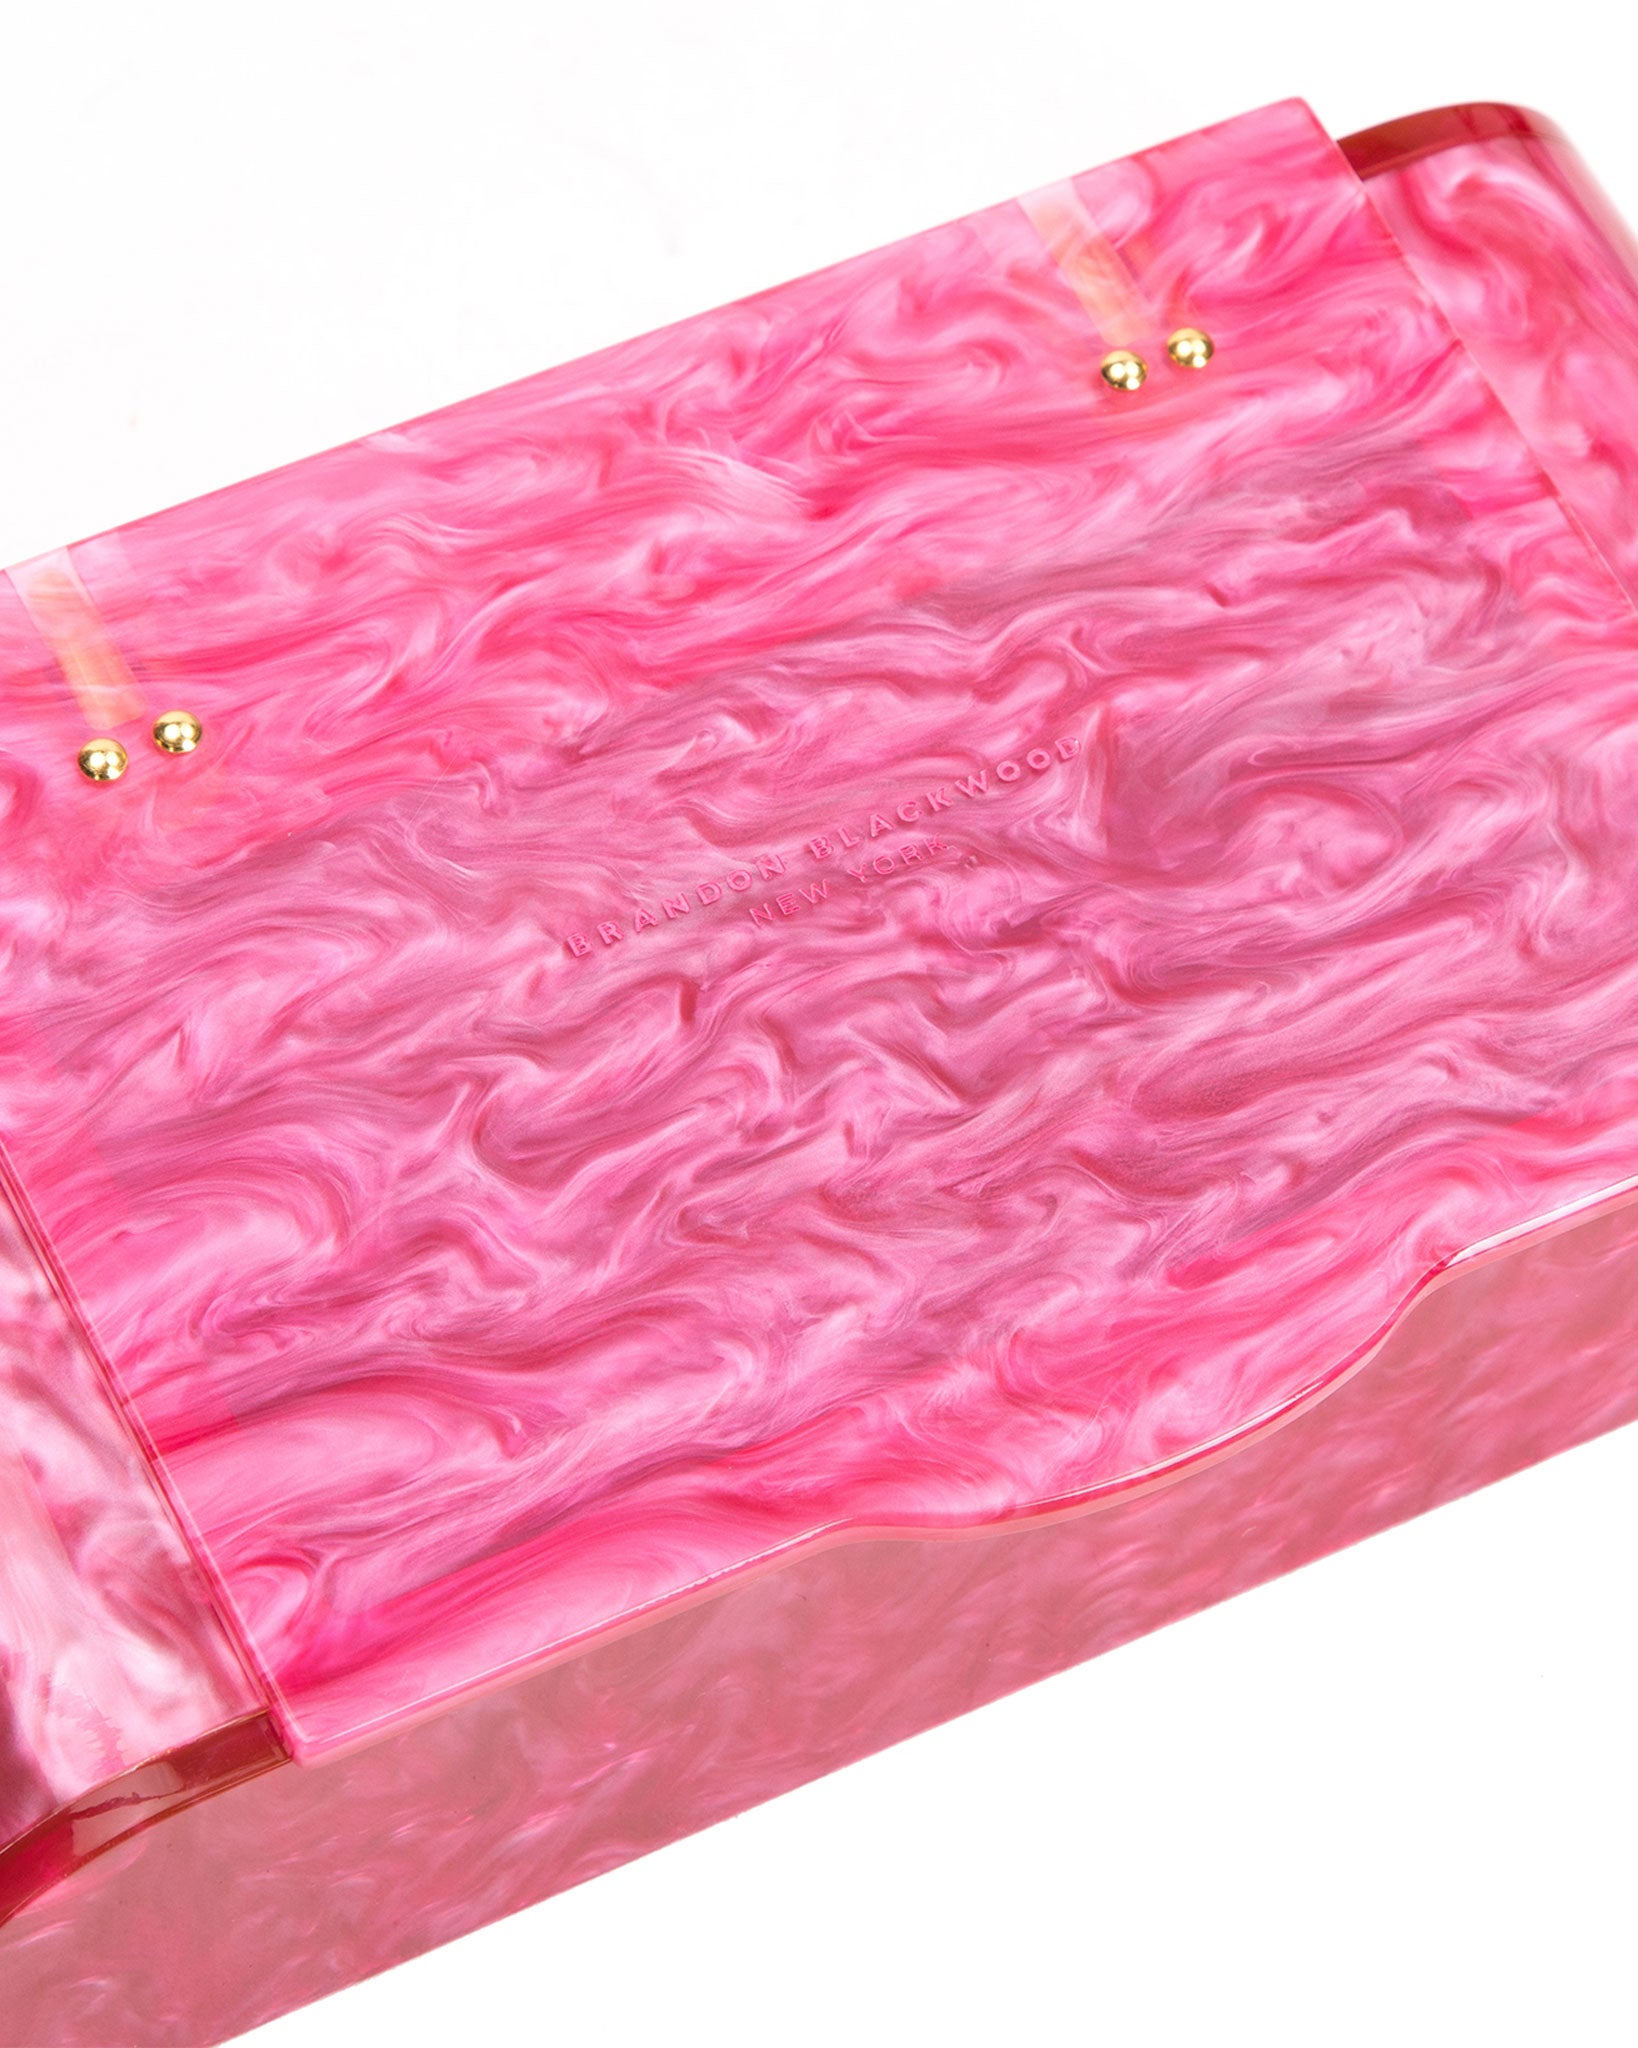 Brandon Blackwood New York - Acrylic Vanity Clutch - Pink Marble